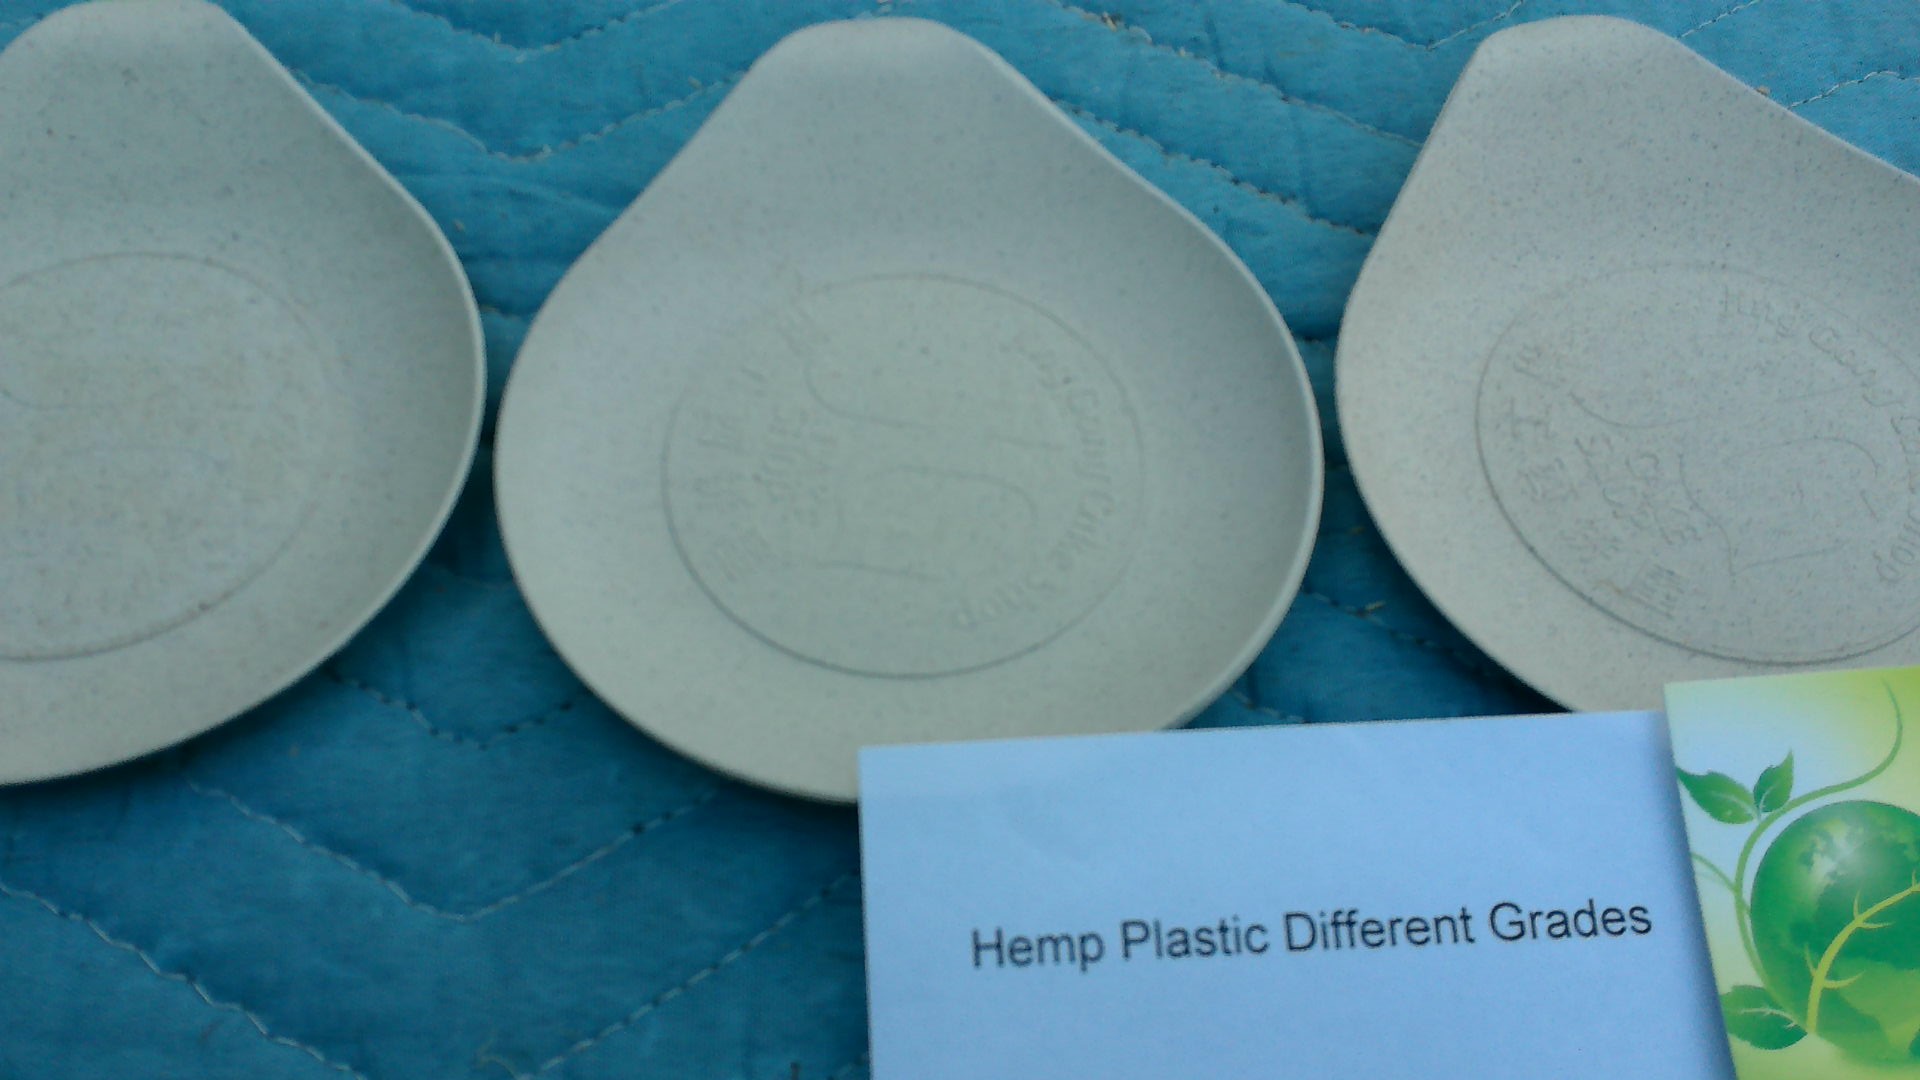 Hemp plastic various grades